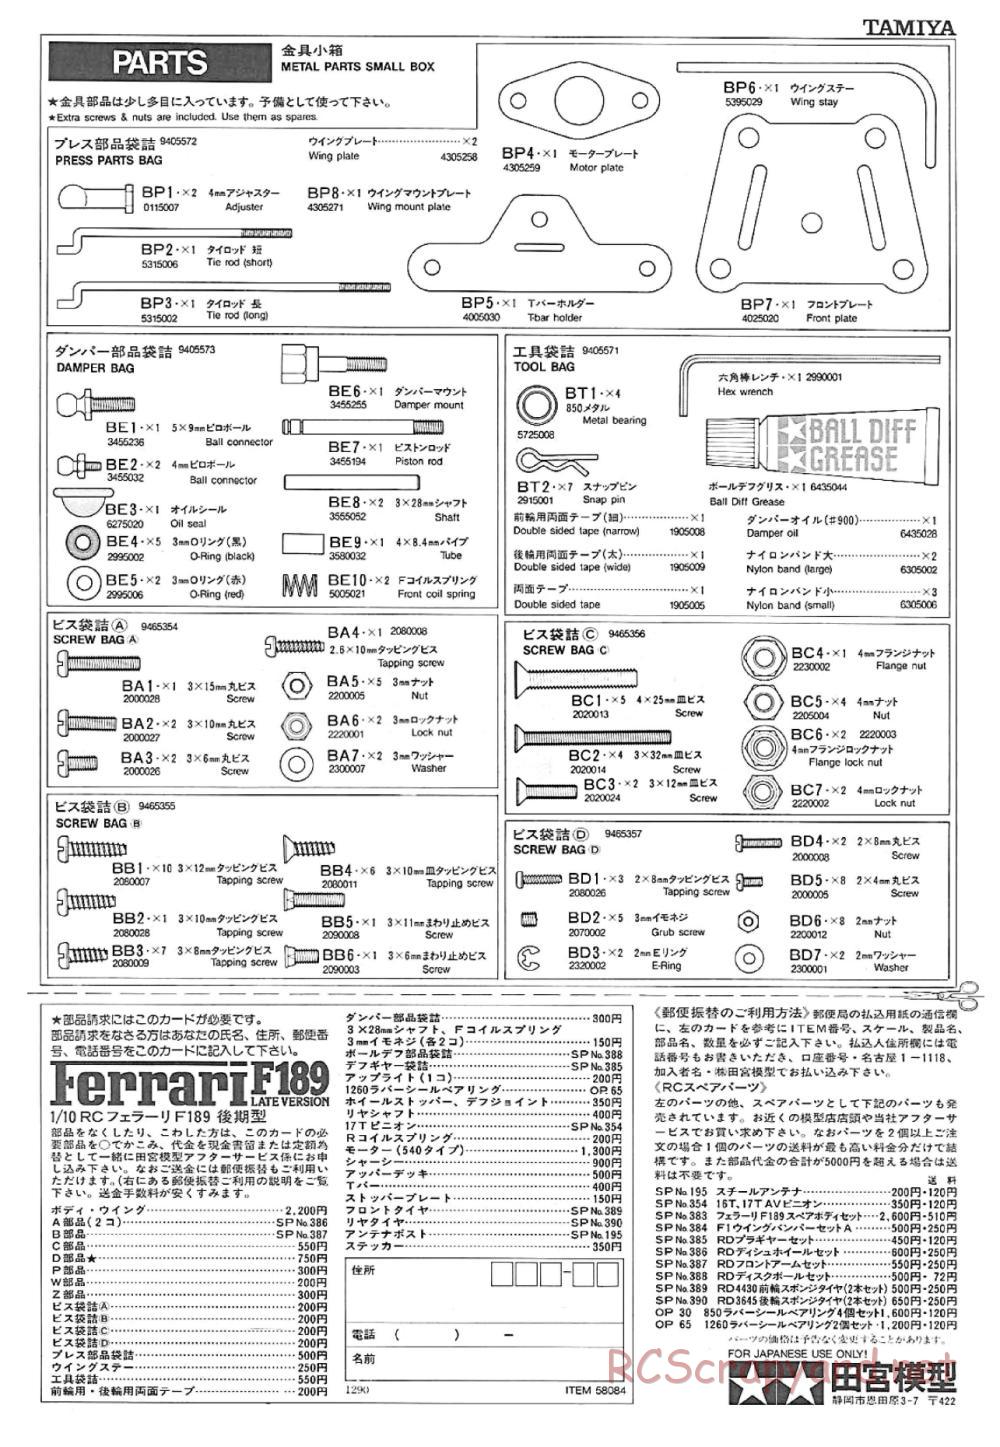 Tamiya - Ferrari F189 Late Version - 58084 - Manual - Page 18